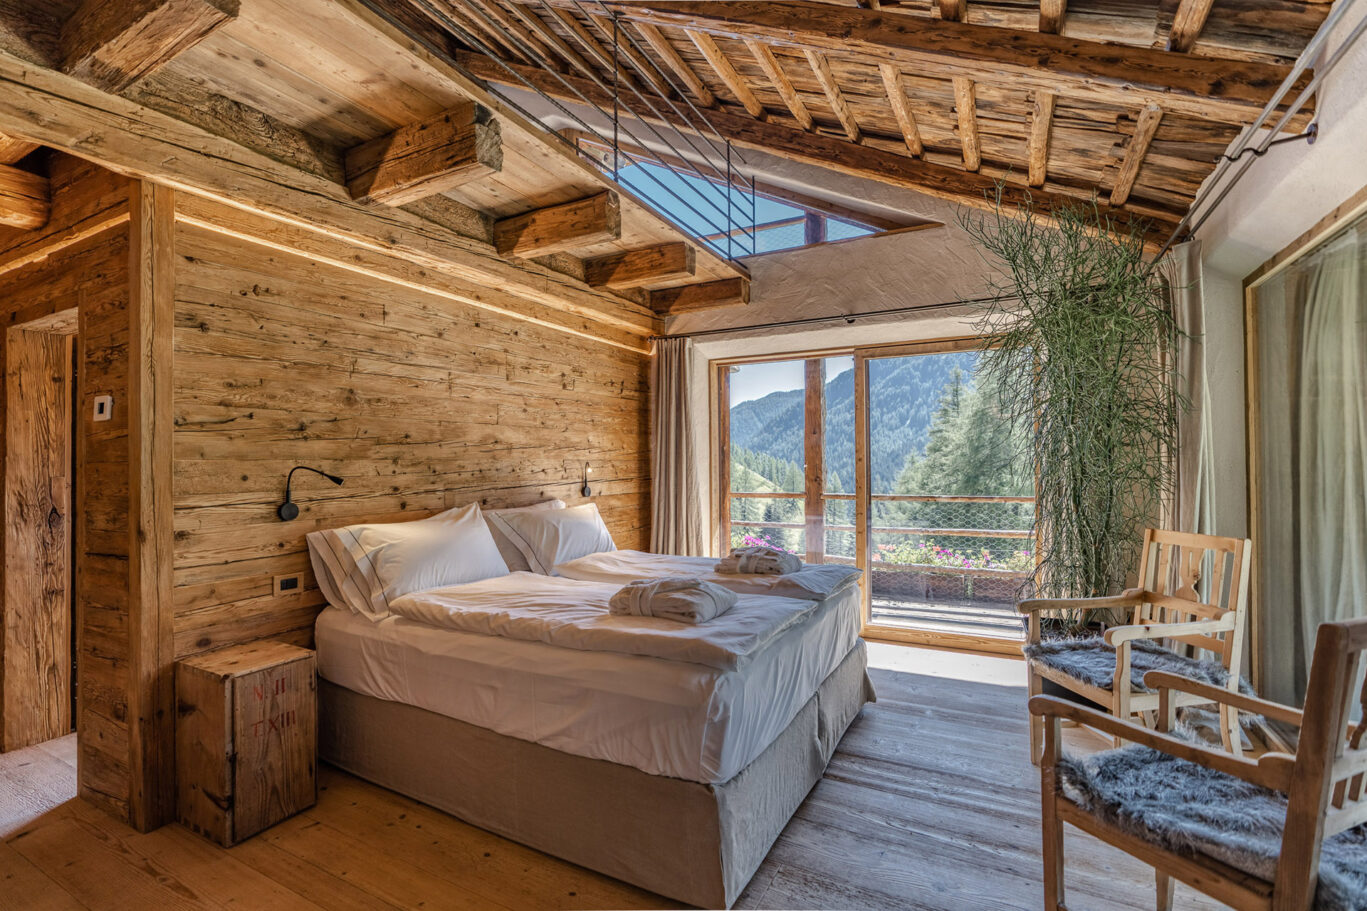 Cesa del louf_Main entrance-luxury chalet Italy master bedroom